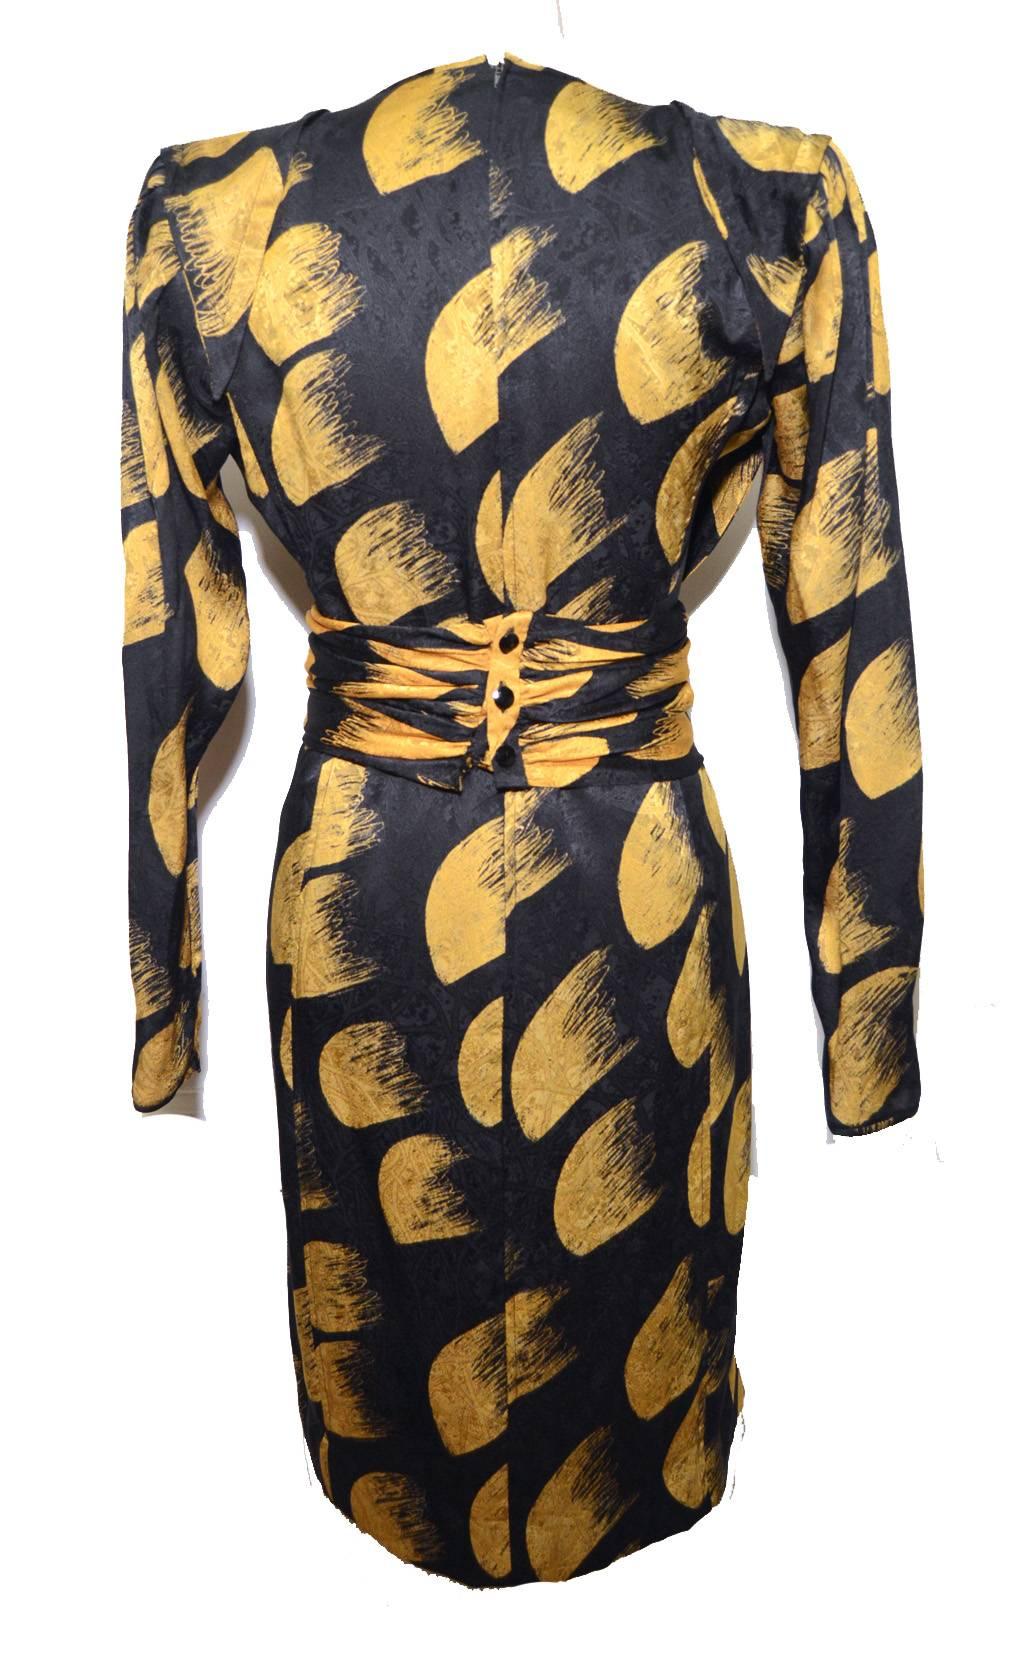 Women's Emanuel Ungaro Black and Yellow Silk Print Dress with Belt Size 8 1980's